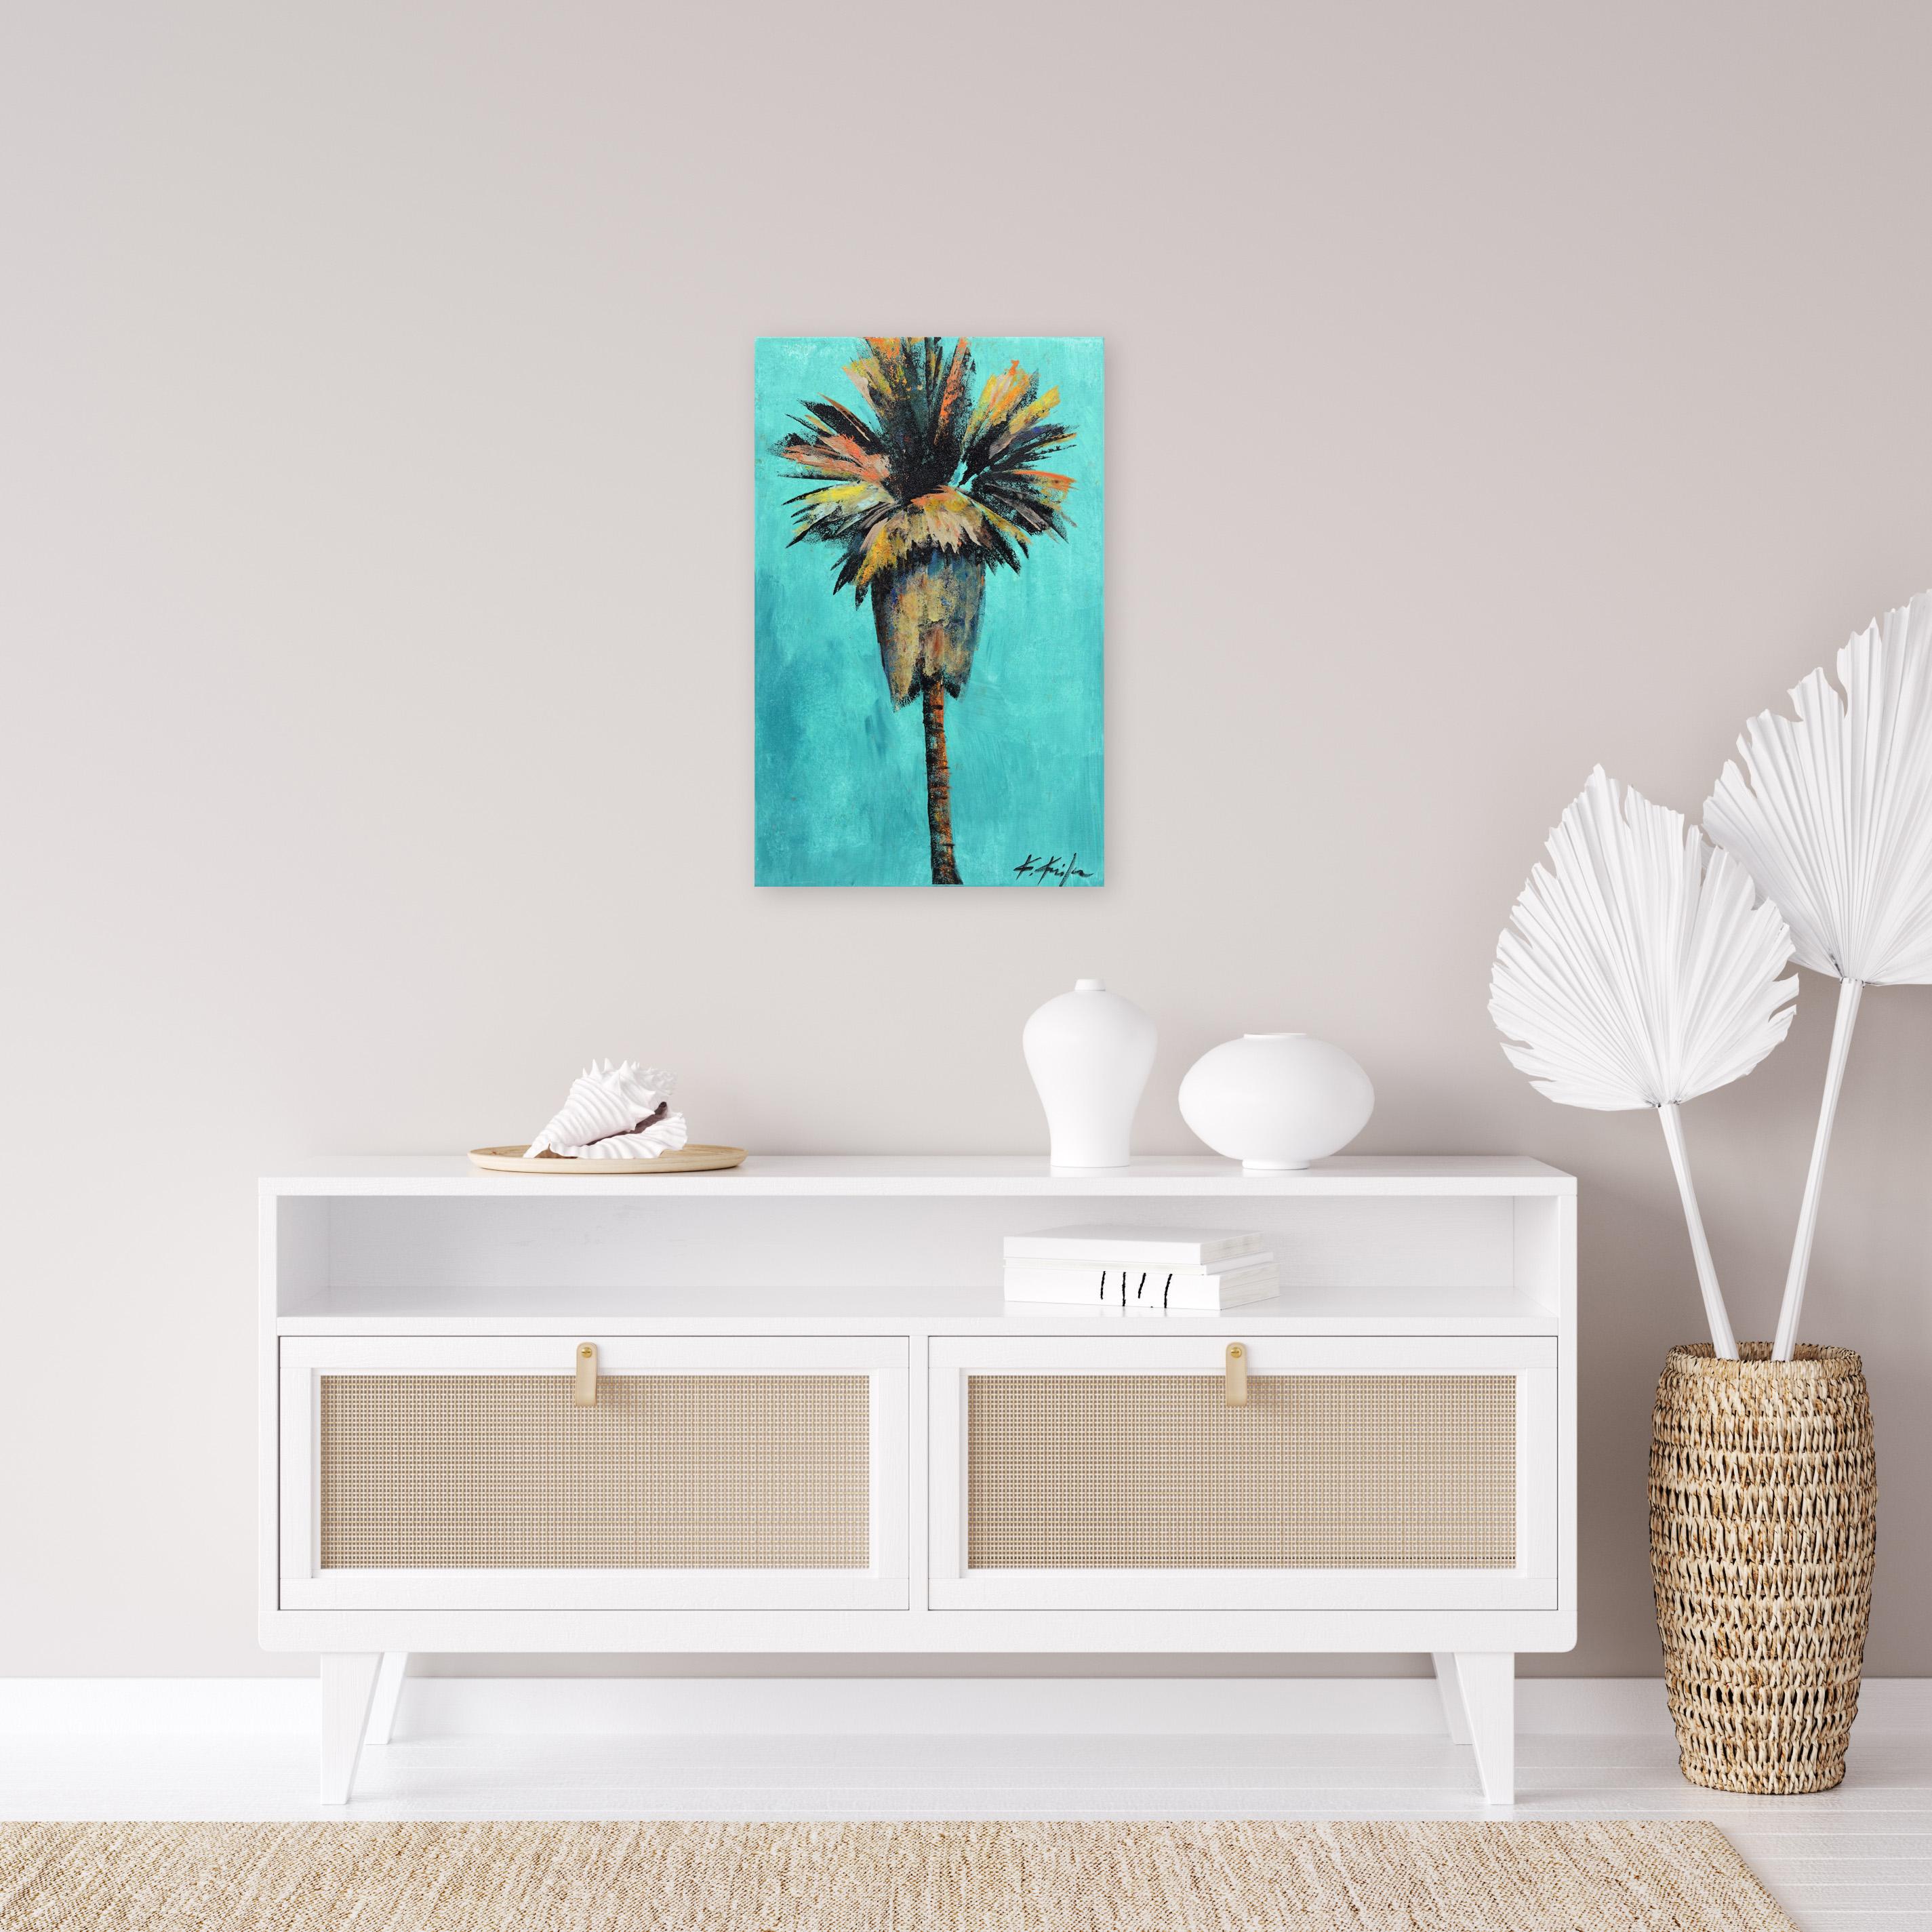 Verdigris Breeze - Original Modern Turquoise Landscape Palm Tree ArtPalm Tree  - Painting by Kathleen Keifer